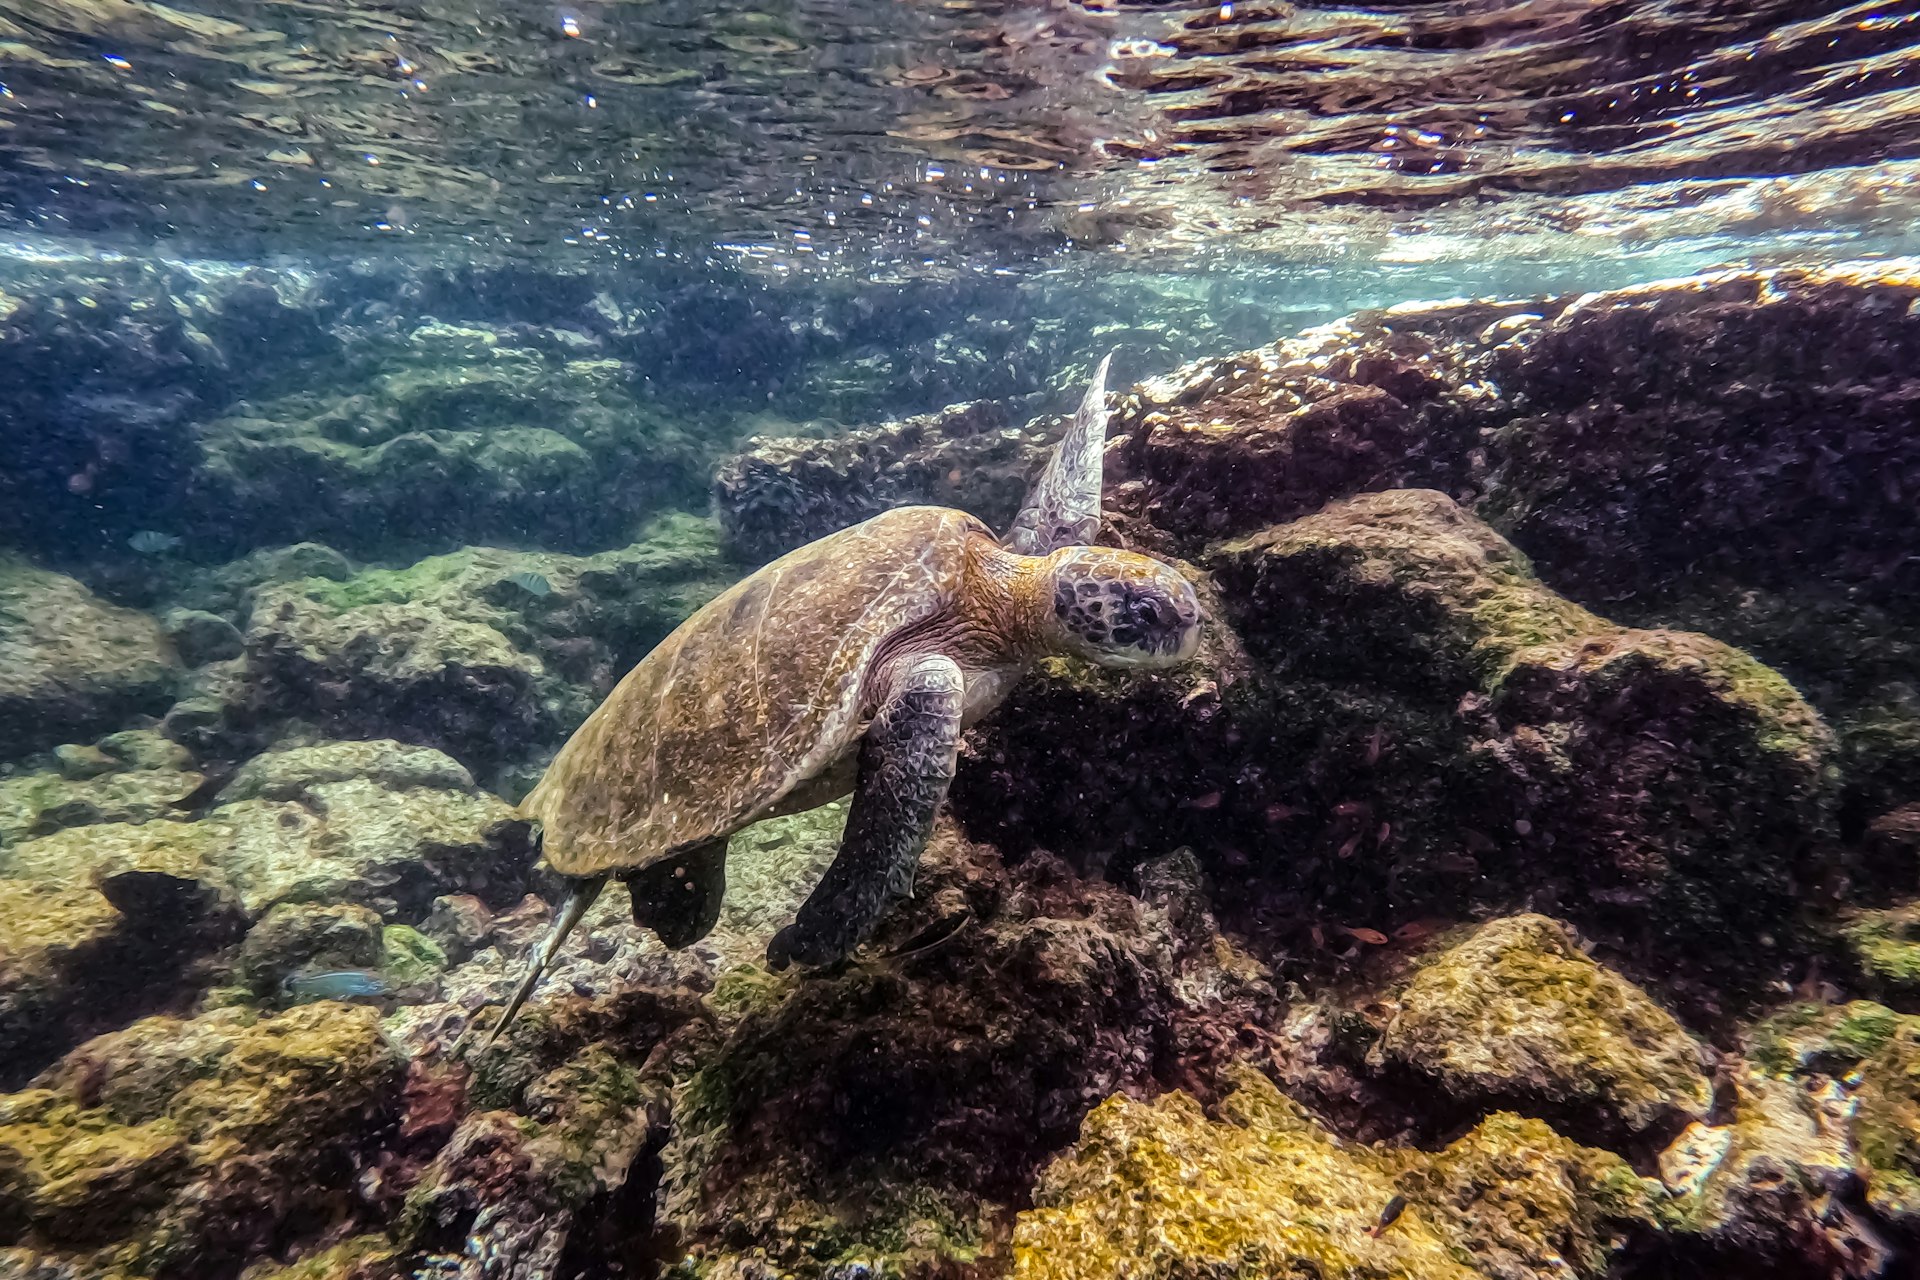 Turtles below the water in the Galapagos Islands 